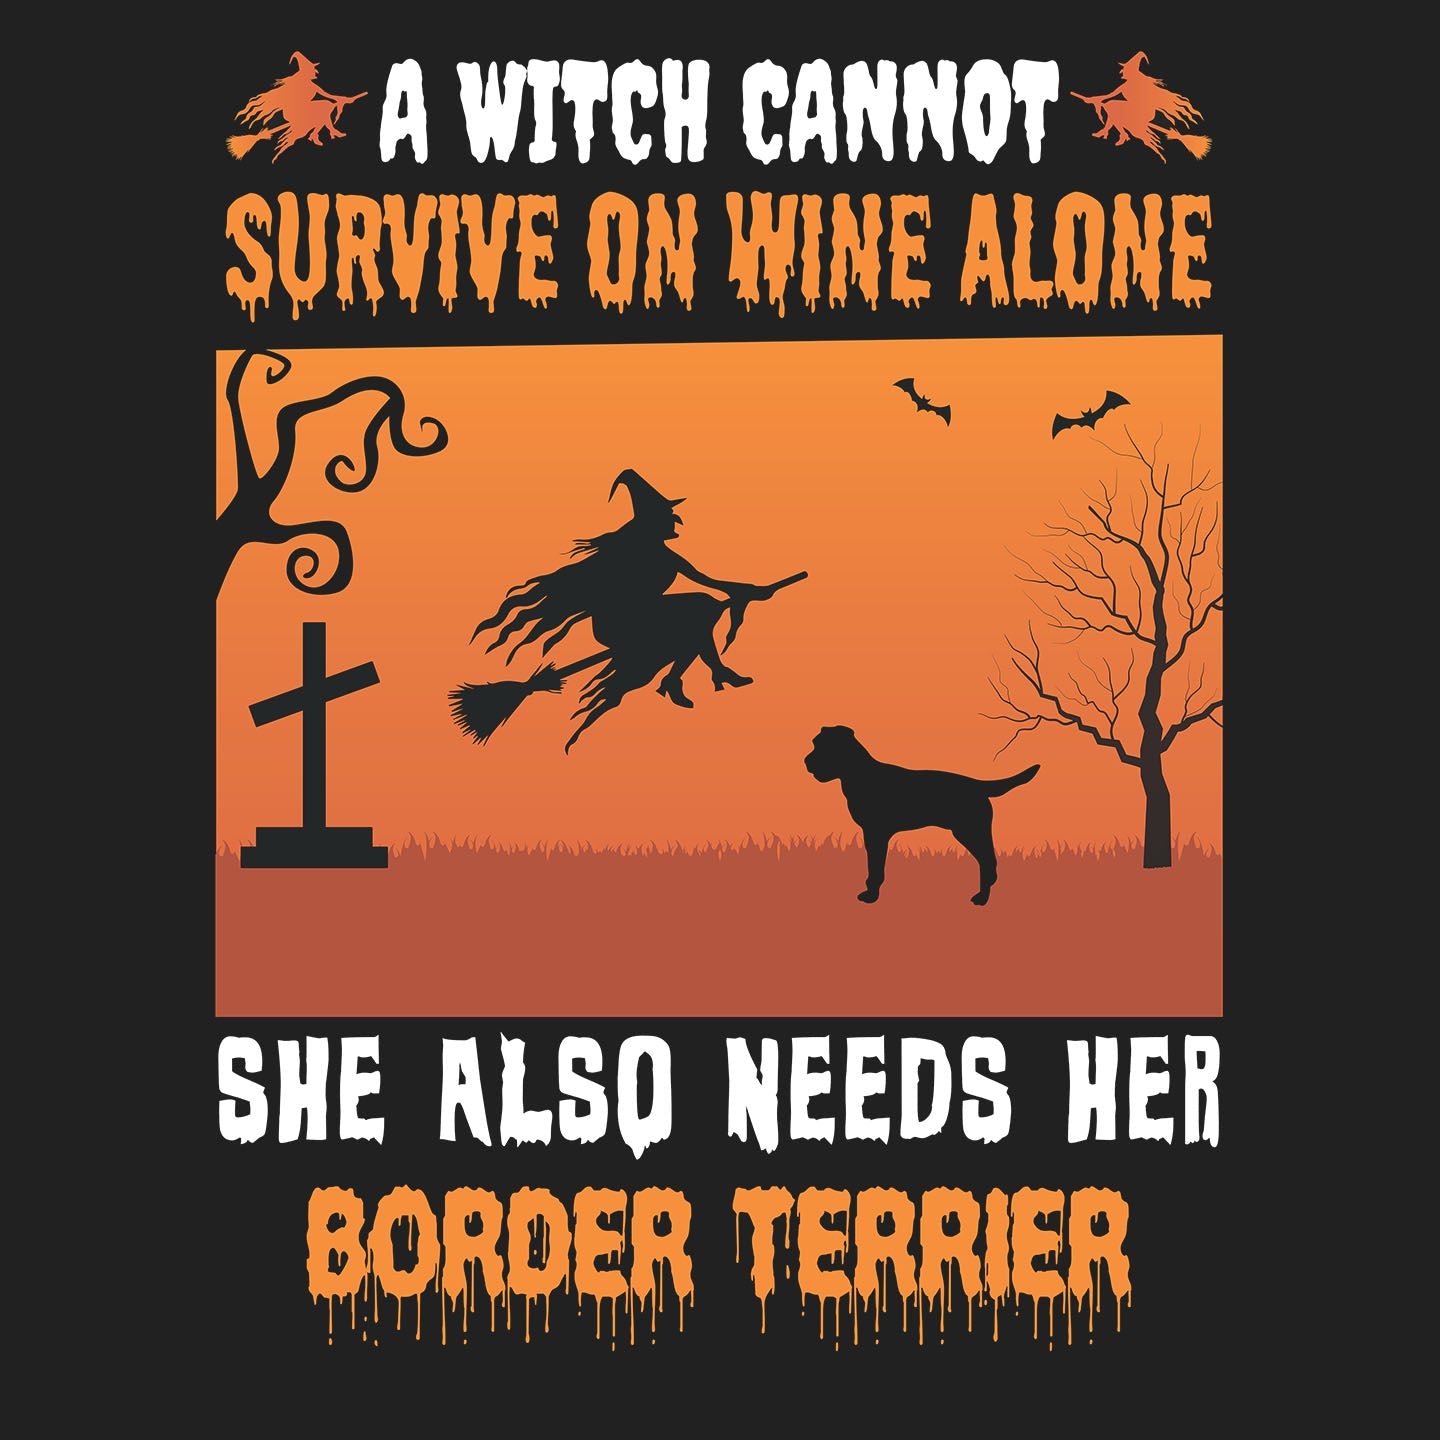 A Witch Needs Her Border Terrier - Women's V-Neck T-Shirt